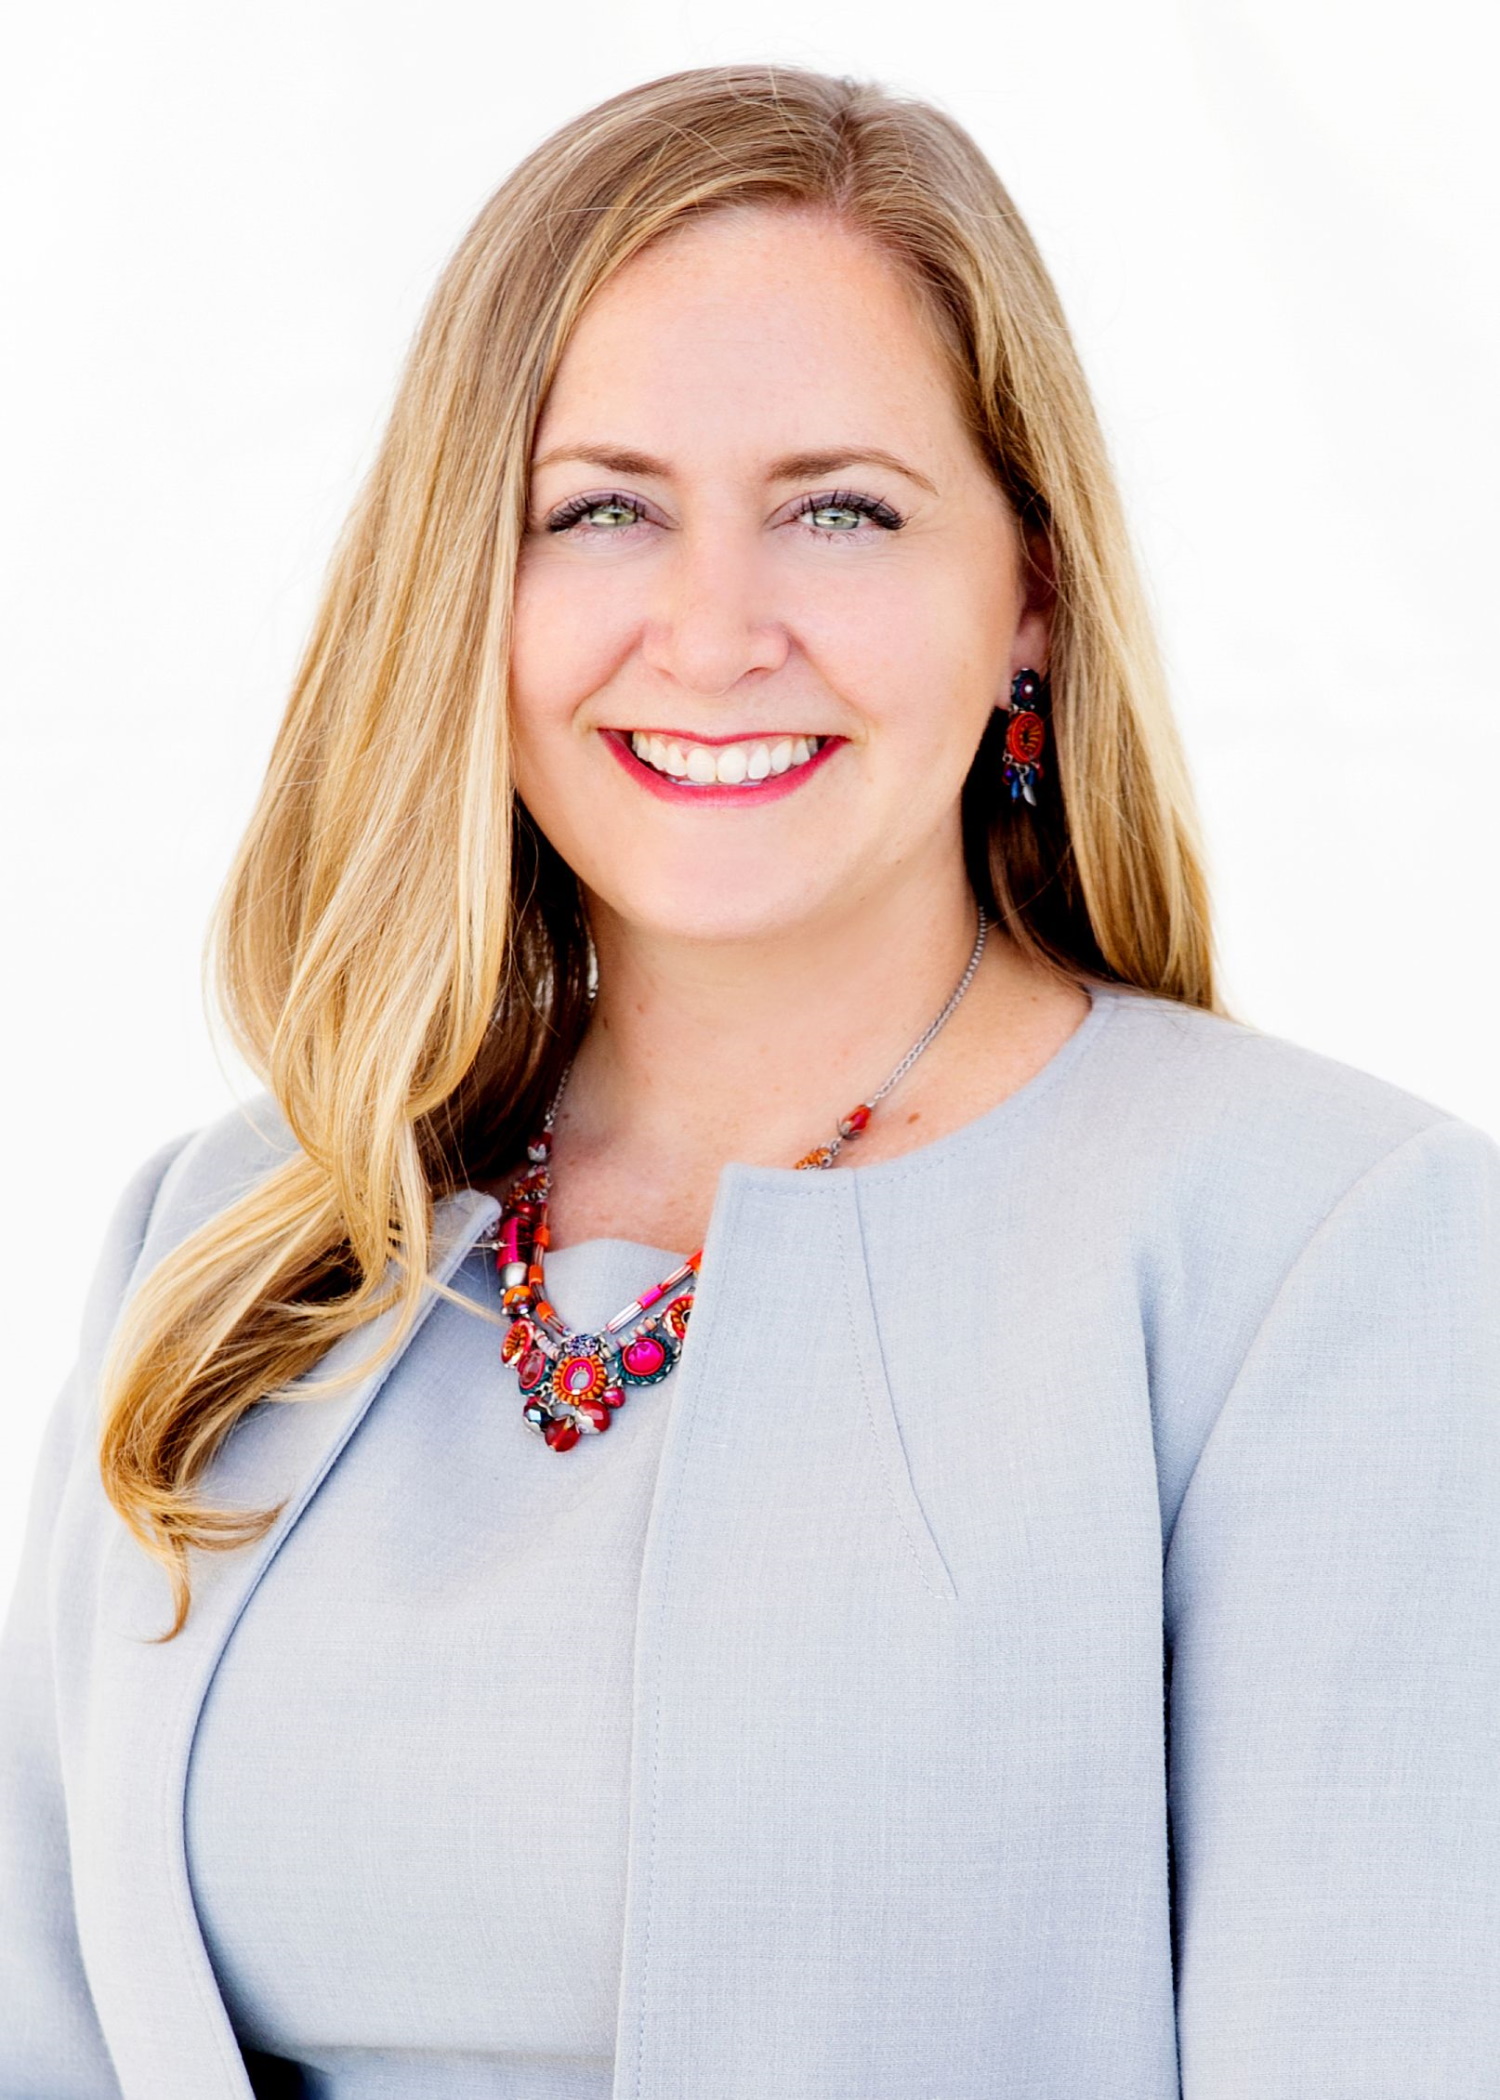 Rachel Ellis - Managing Partner at Livelihood Law